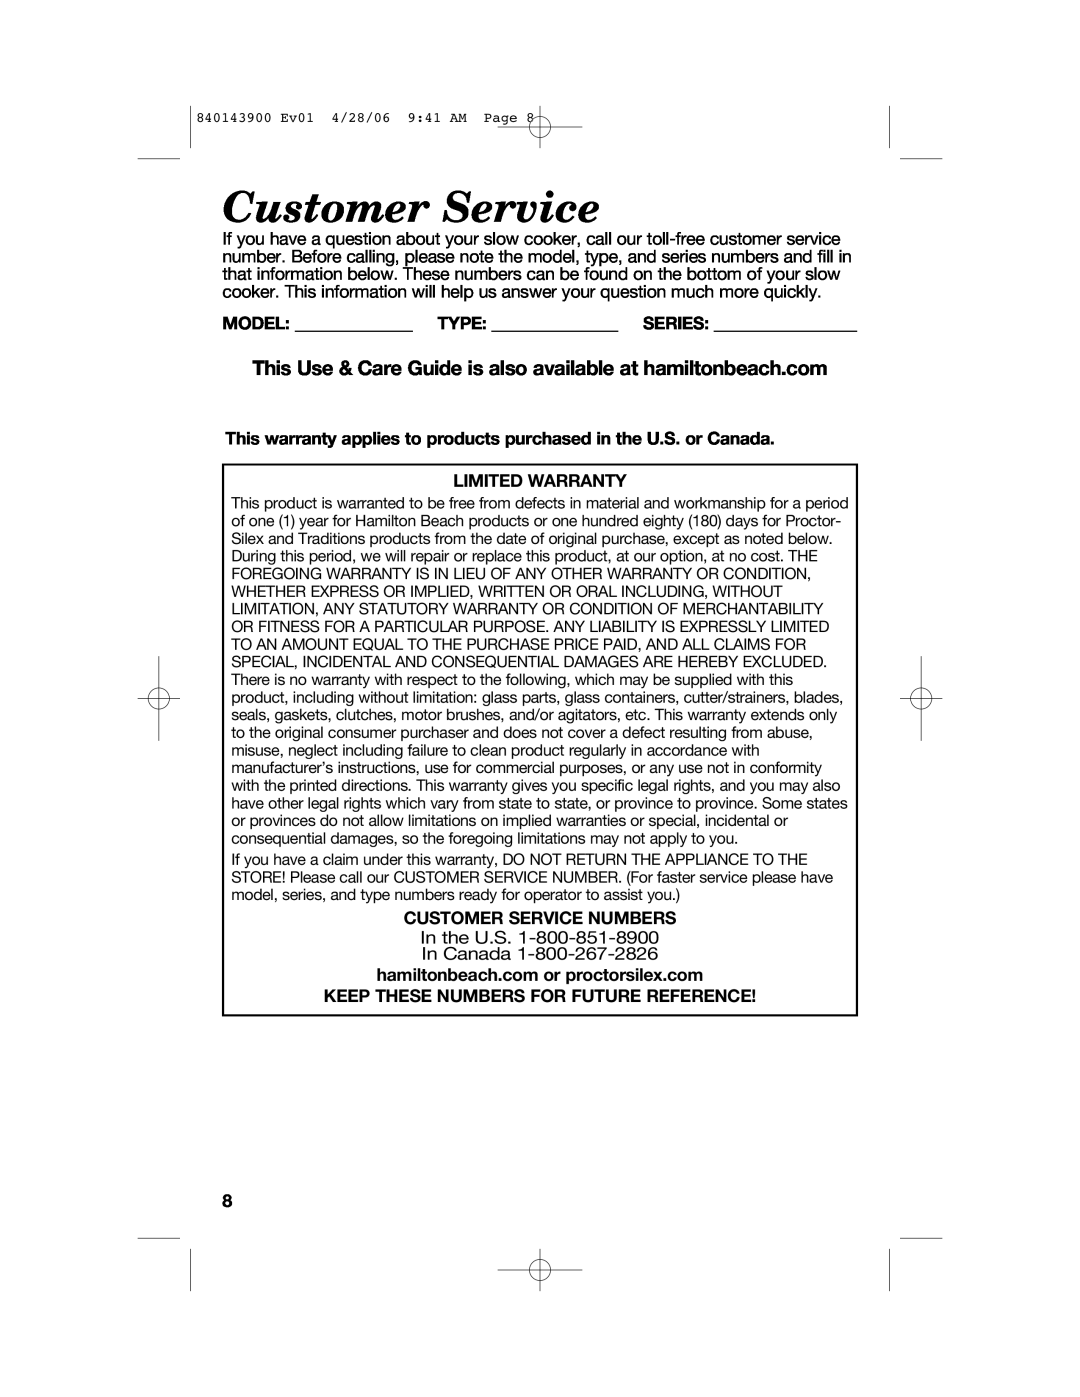 Hamilton Beach 840143900 manual Limited Warranty, Customer Service Numbers, hamiltonbeach.com or proctorsilex.com 